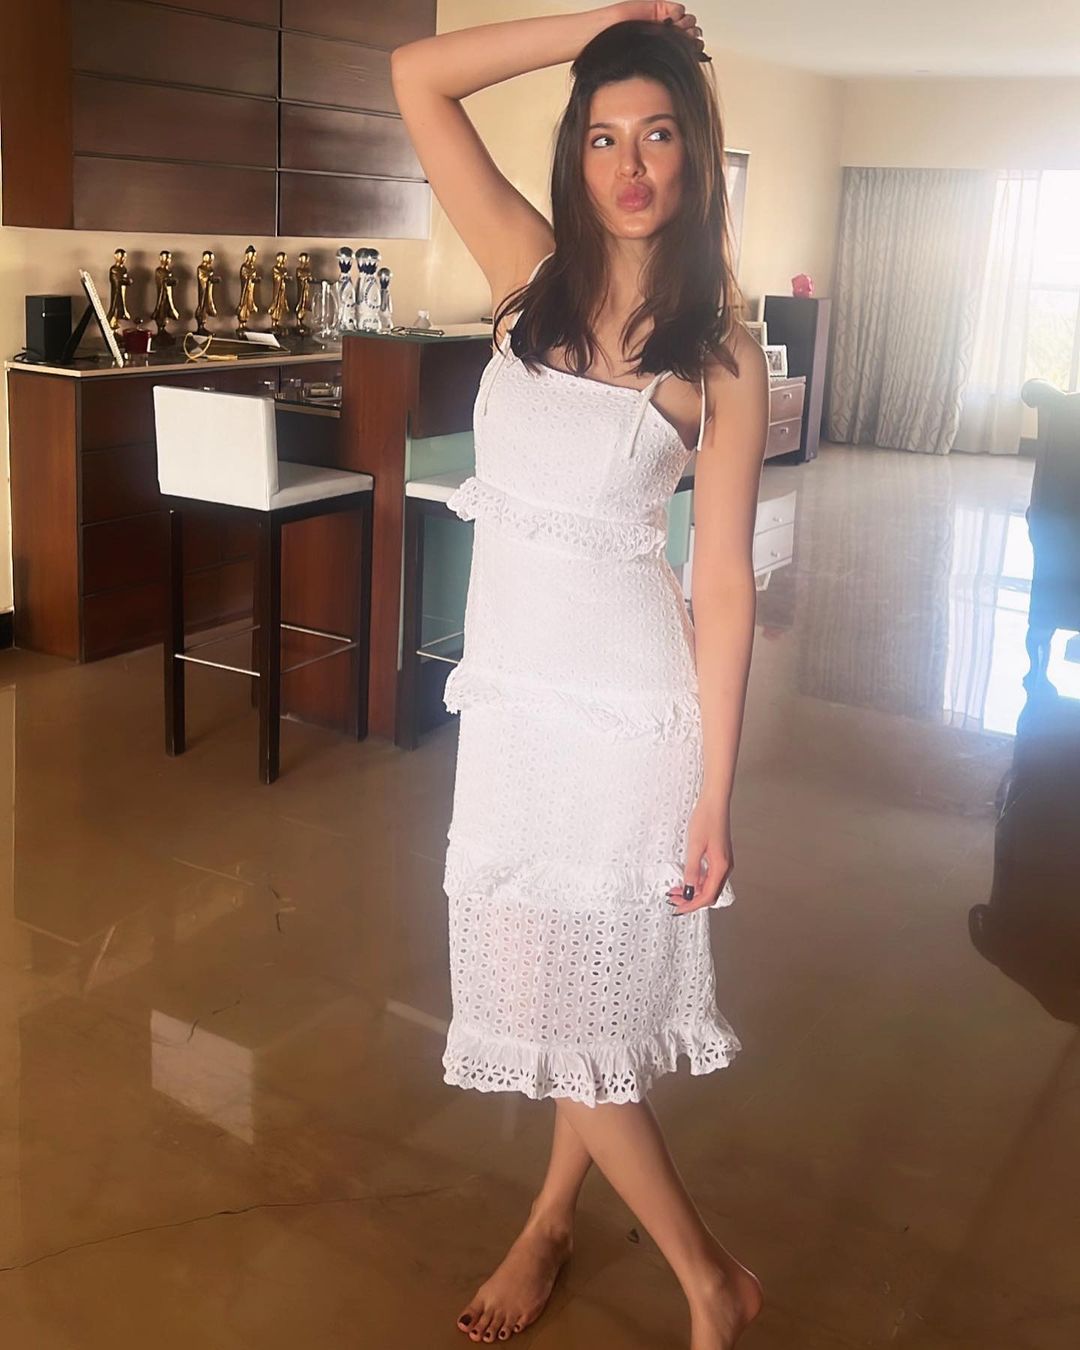 Shanaya Kapoor looks cute in the white midi dress.